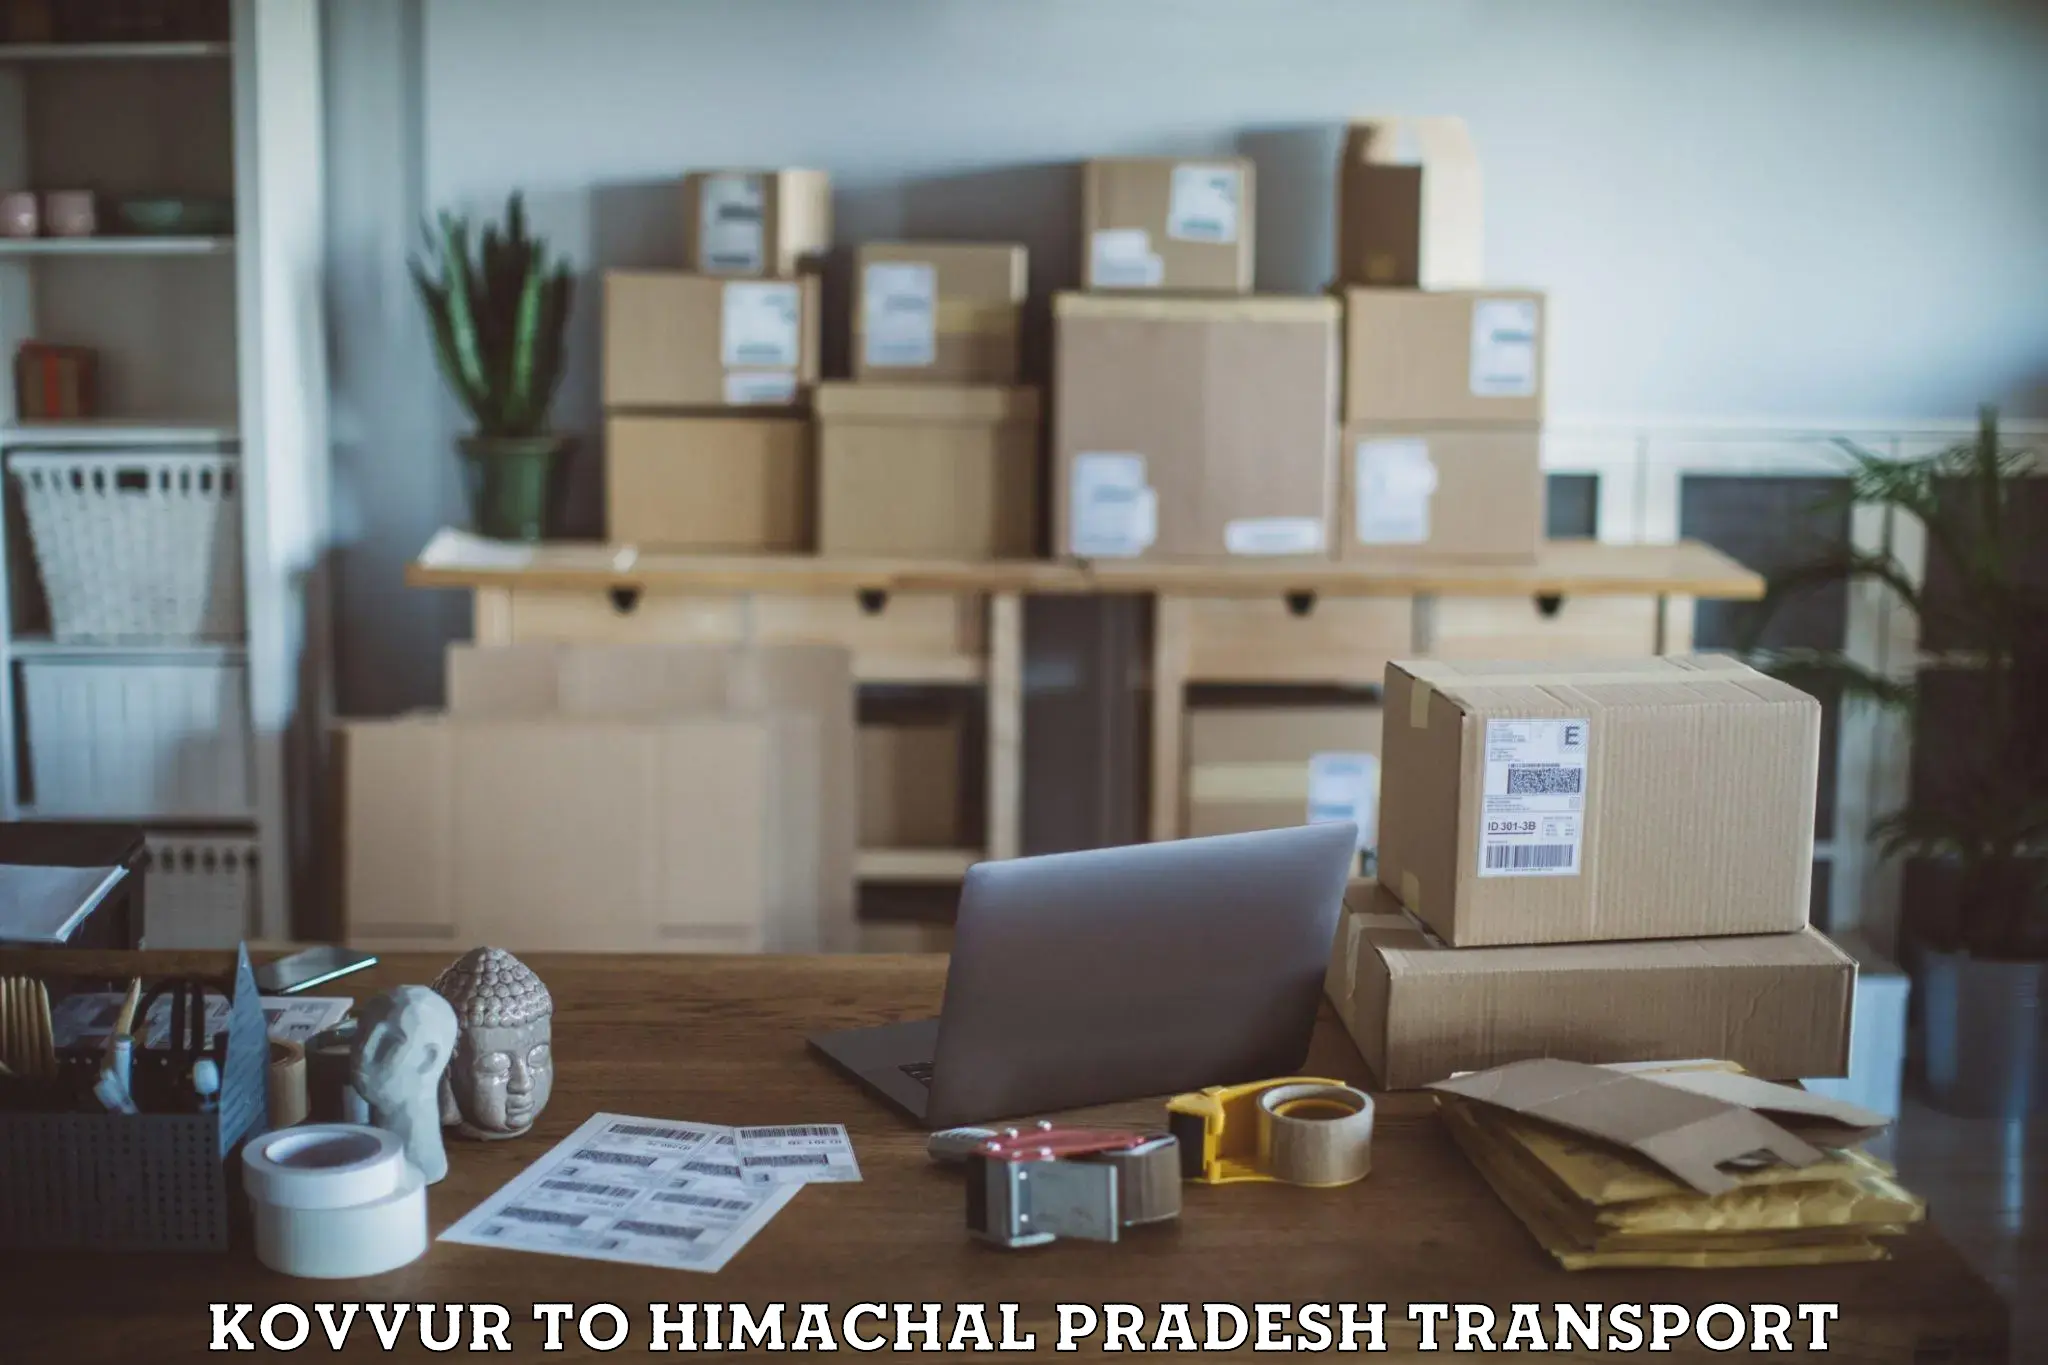 Truck transport companies in India Kovvur to Kangra